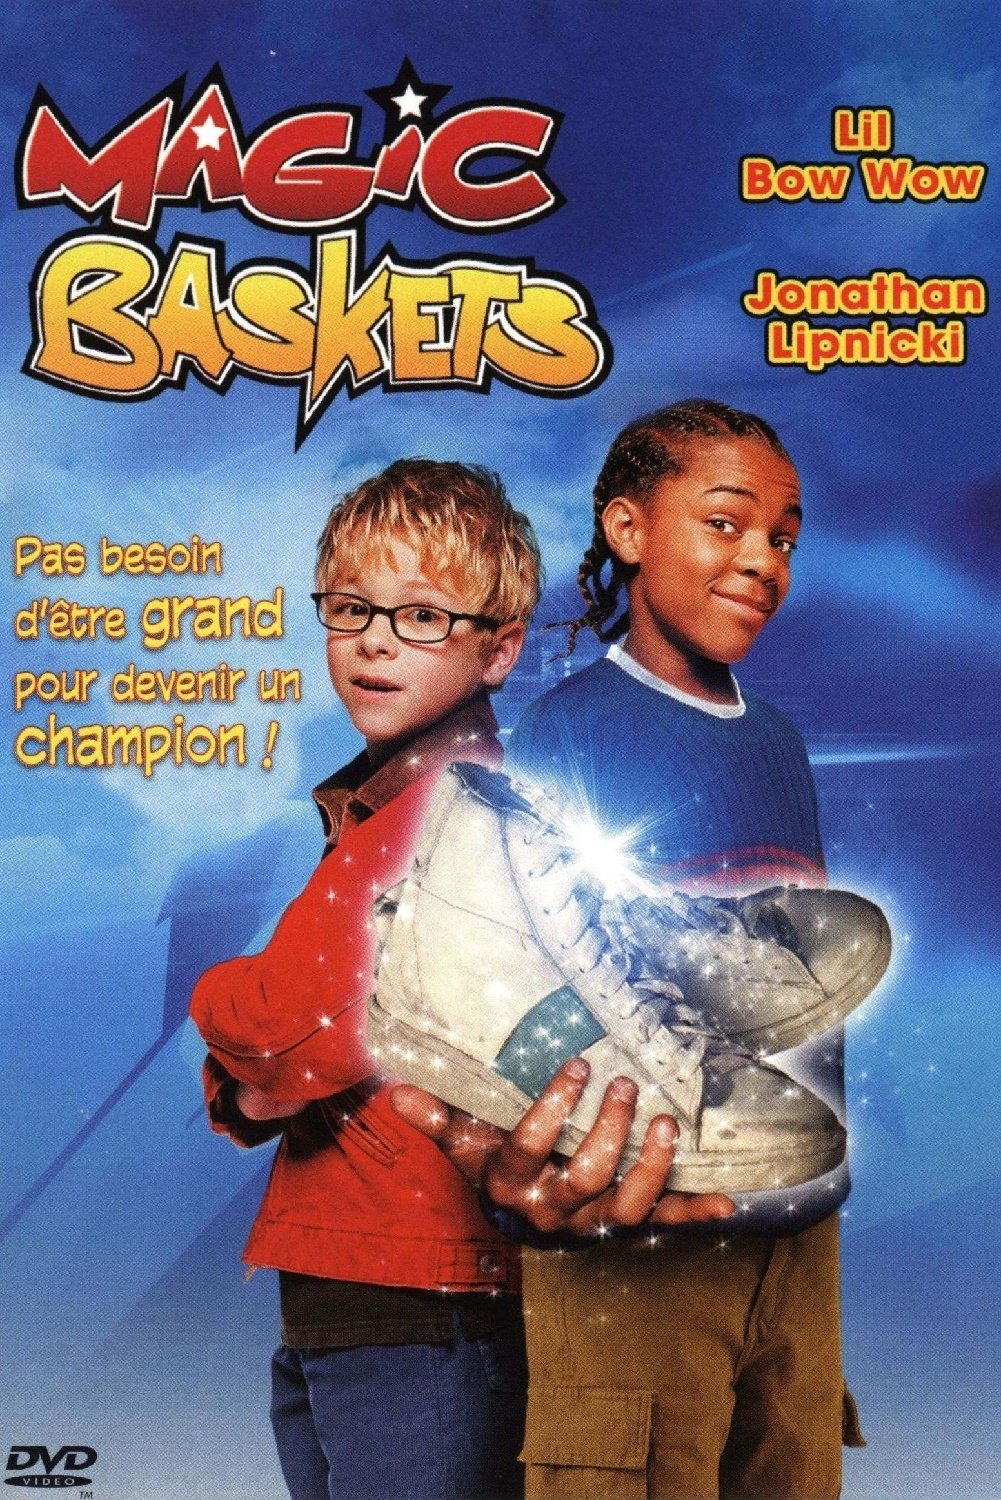 Affiche du film "Magic baskets"